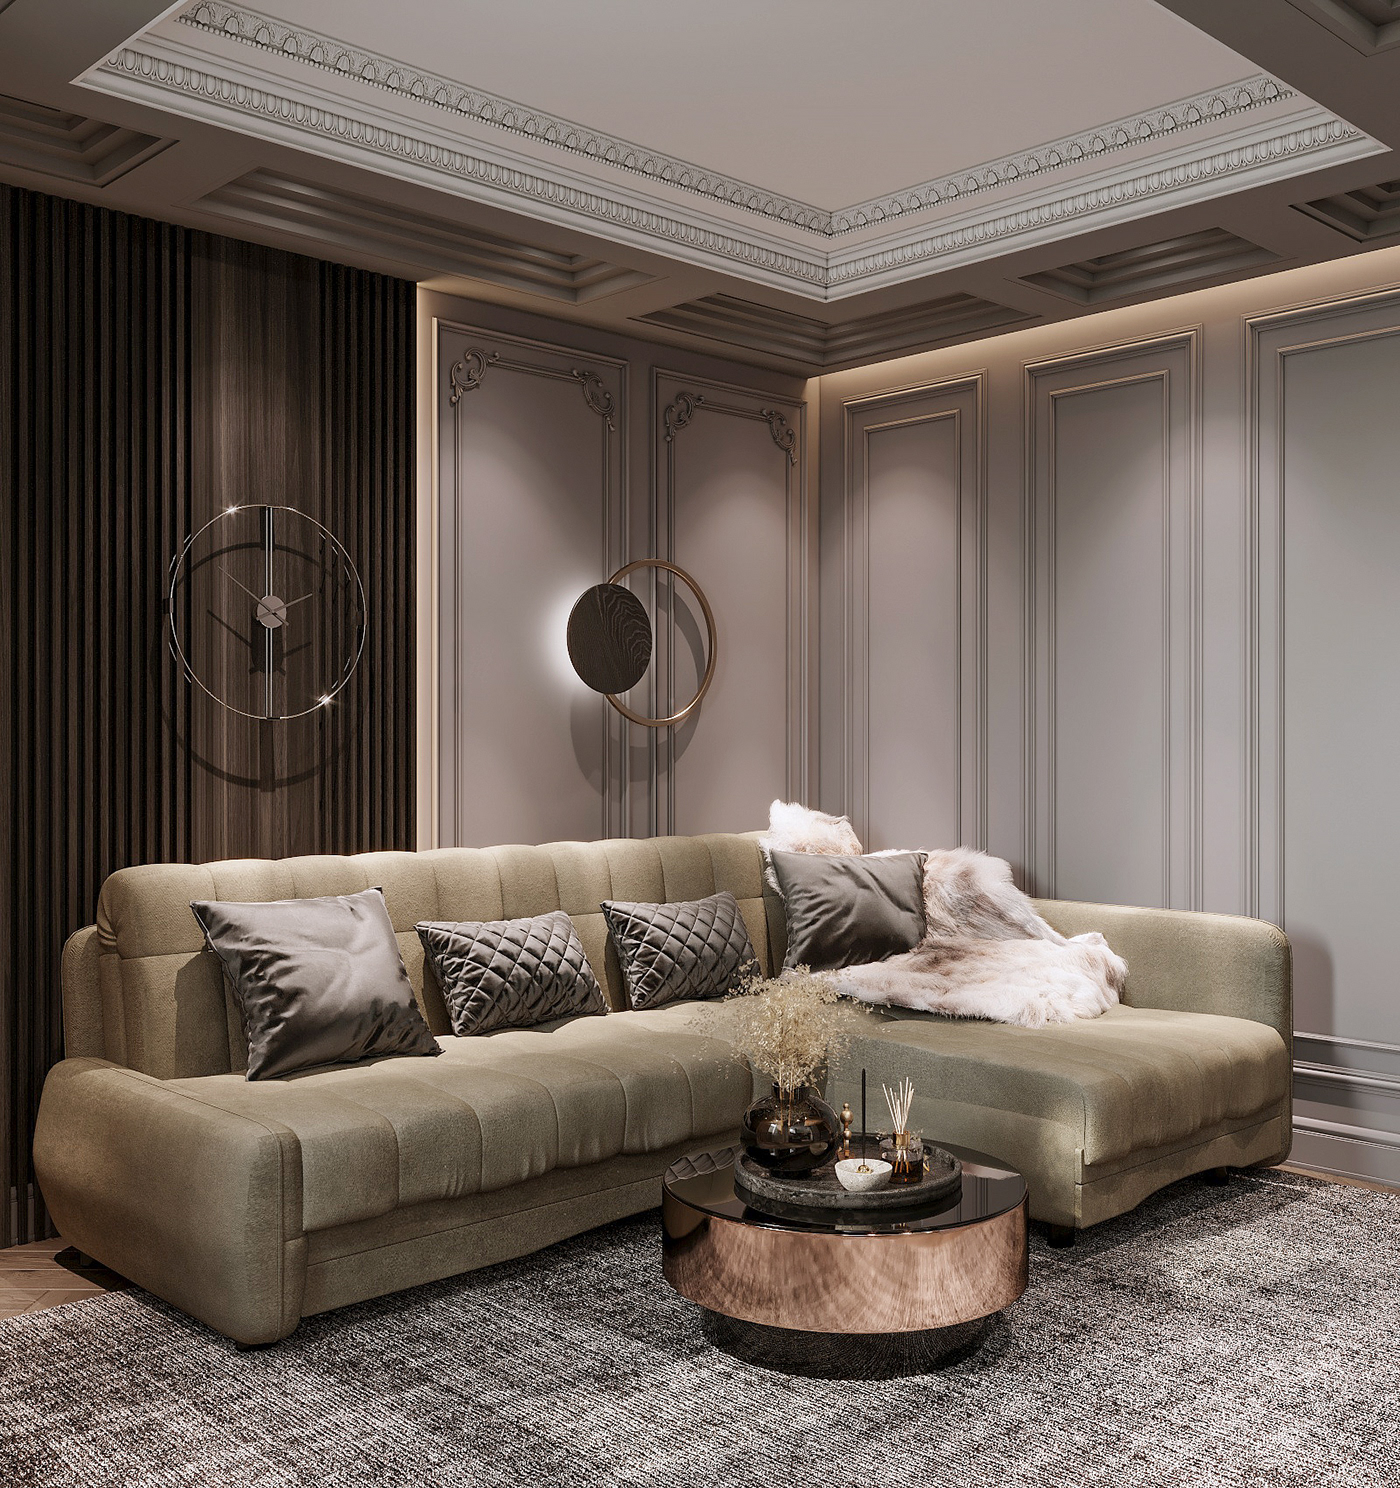 3dsmax design design interior interior design  visualisation визуализация дизайн интерьера интерьер